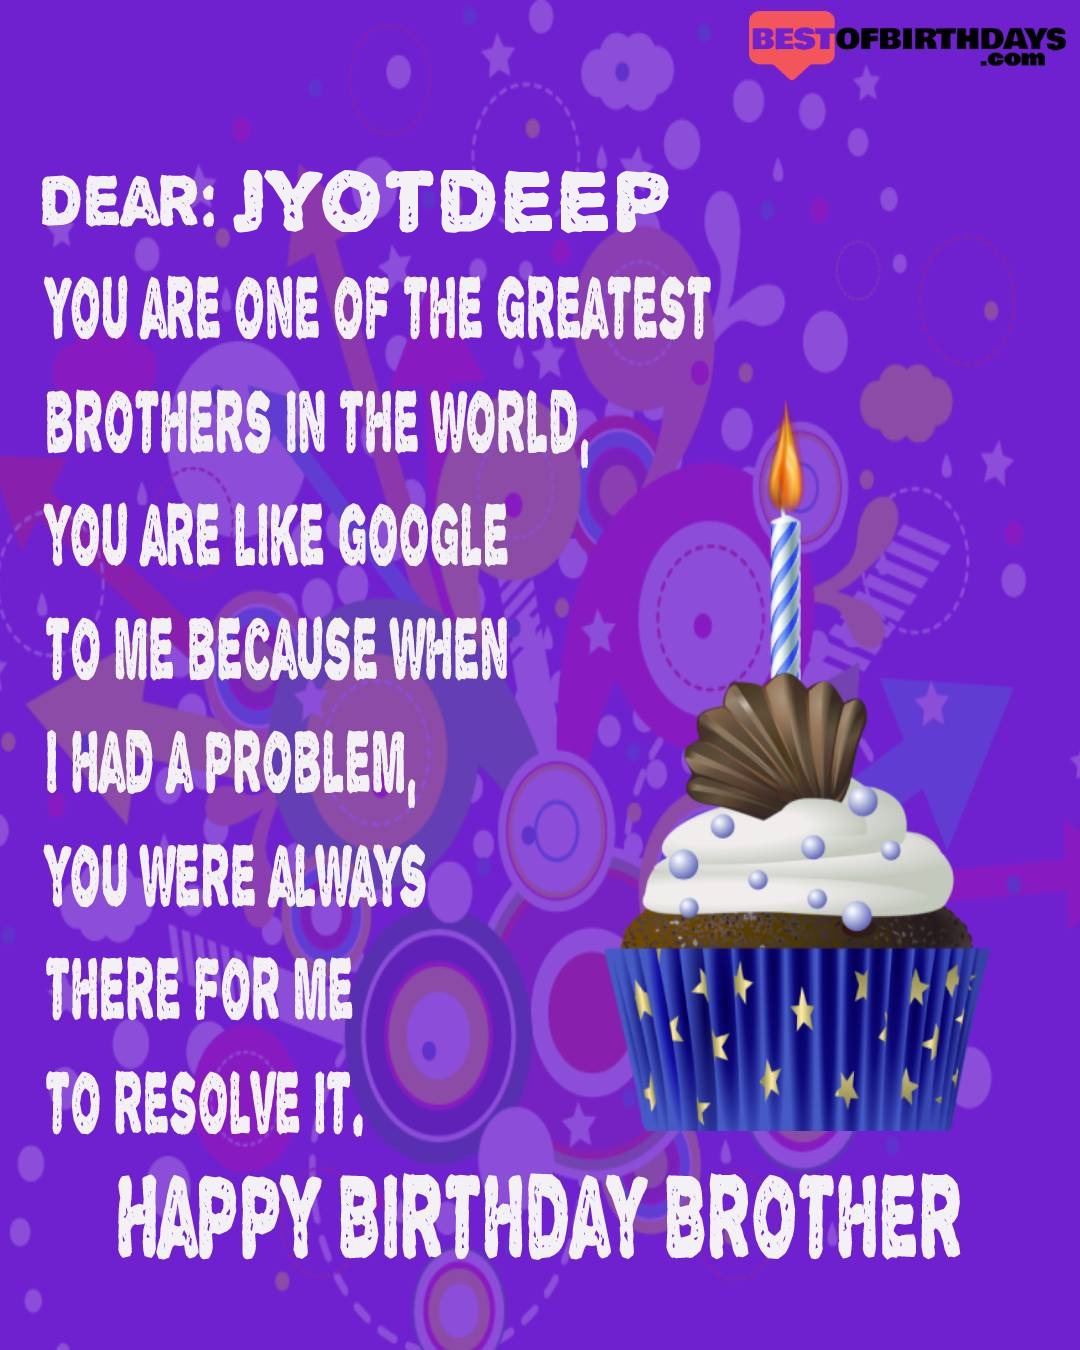 Happy birthday jyotdeep bhai brother bro